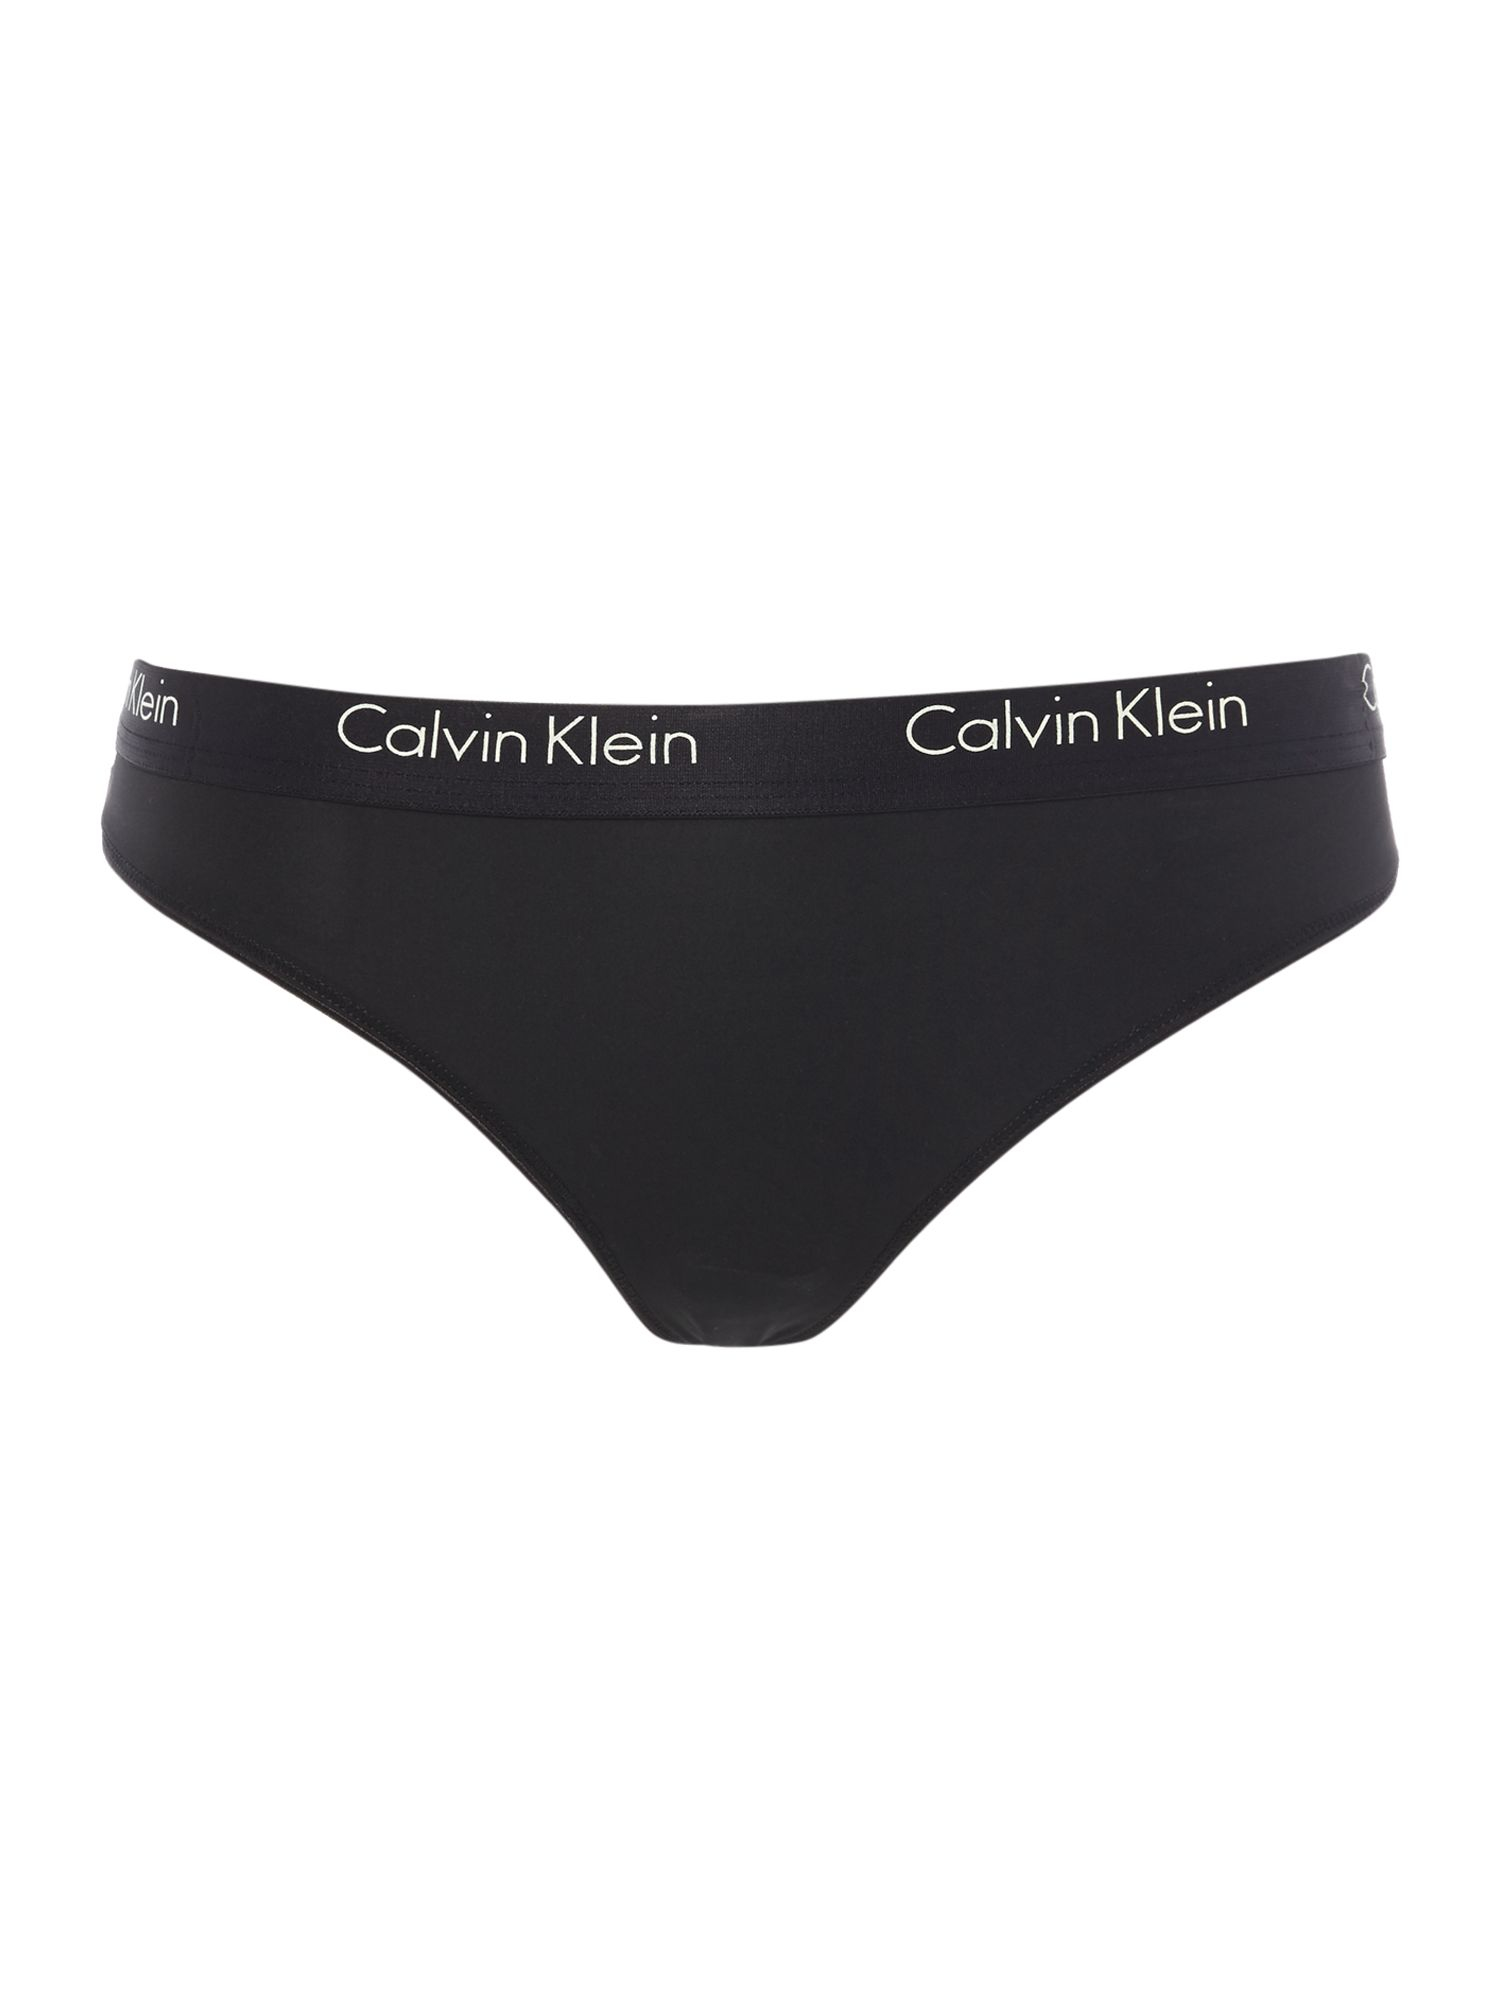 Calvin klein Ck One Micro Thong in Black | Lyst